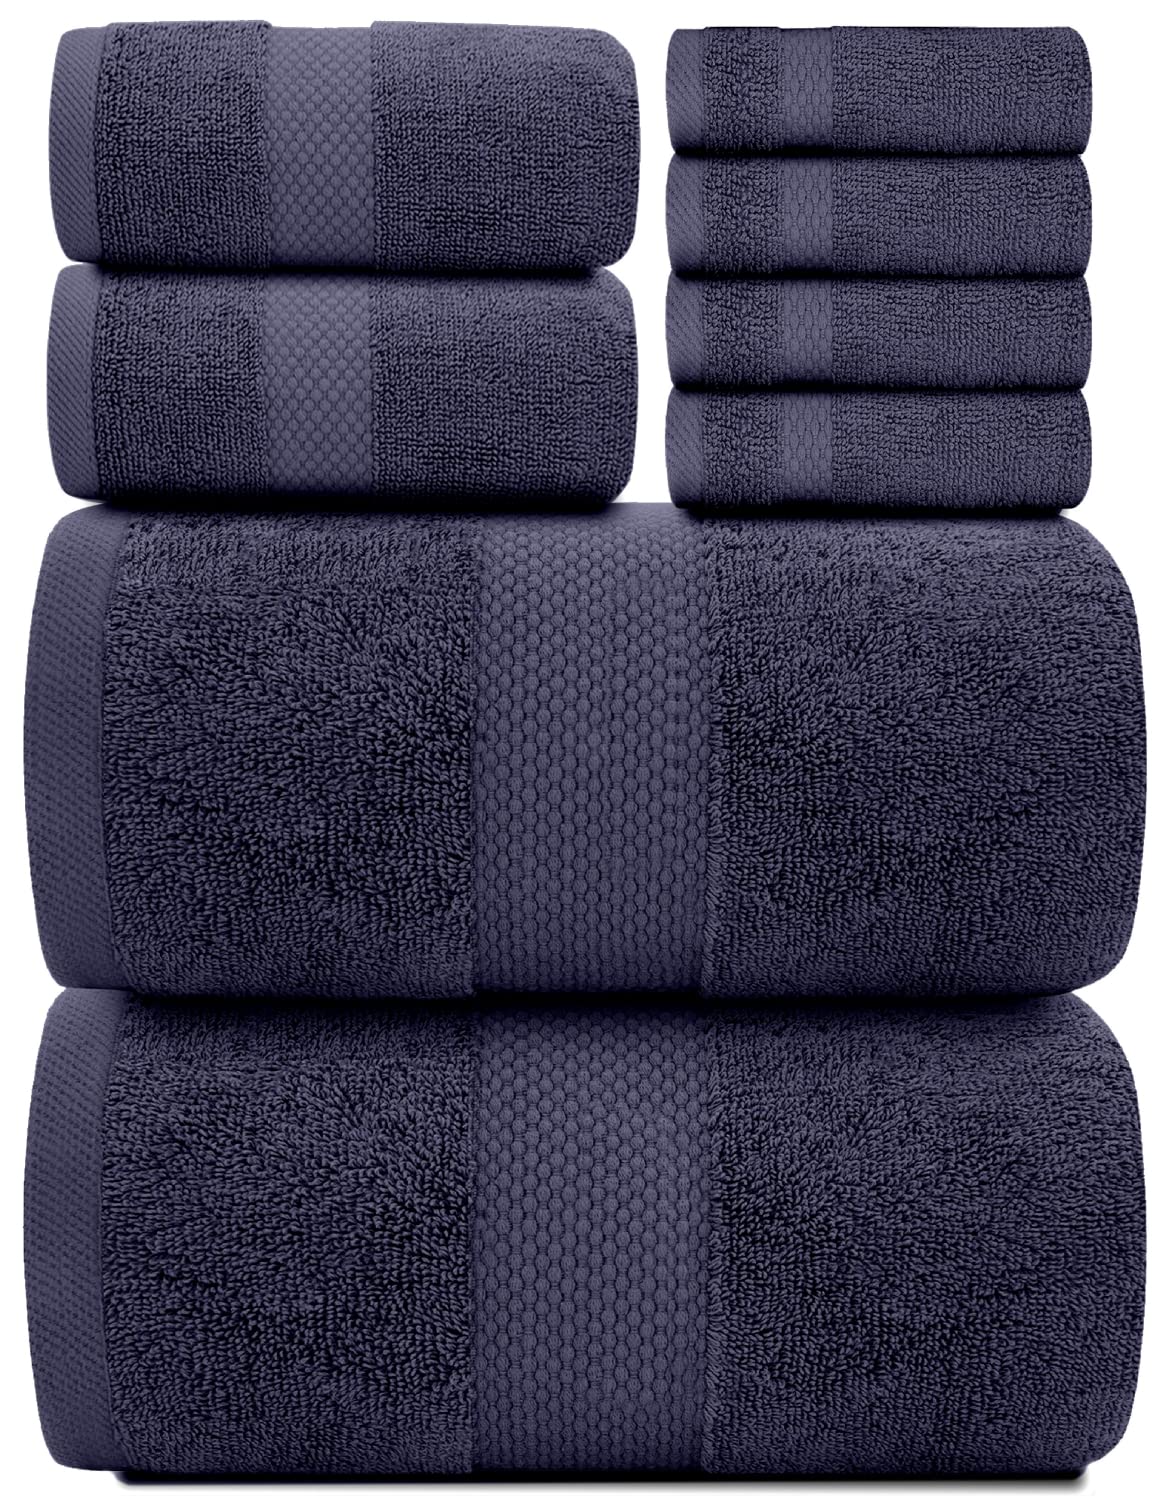 White Classic Luxury Navy Blue Bath Towel Set - Hotel Soft Cotton 2/Bath 2/Hand 4/Wash - 8 Piece - image 1 of 9